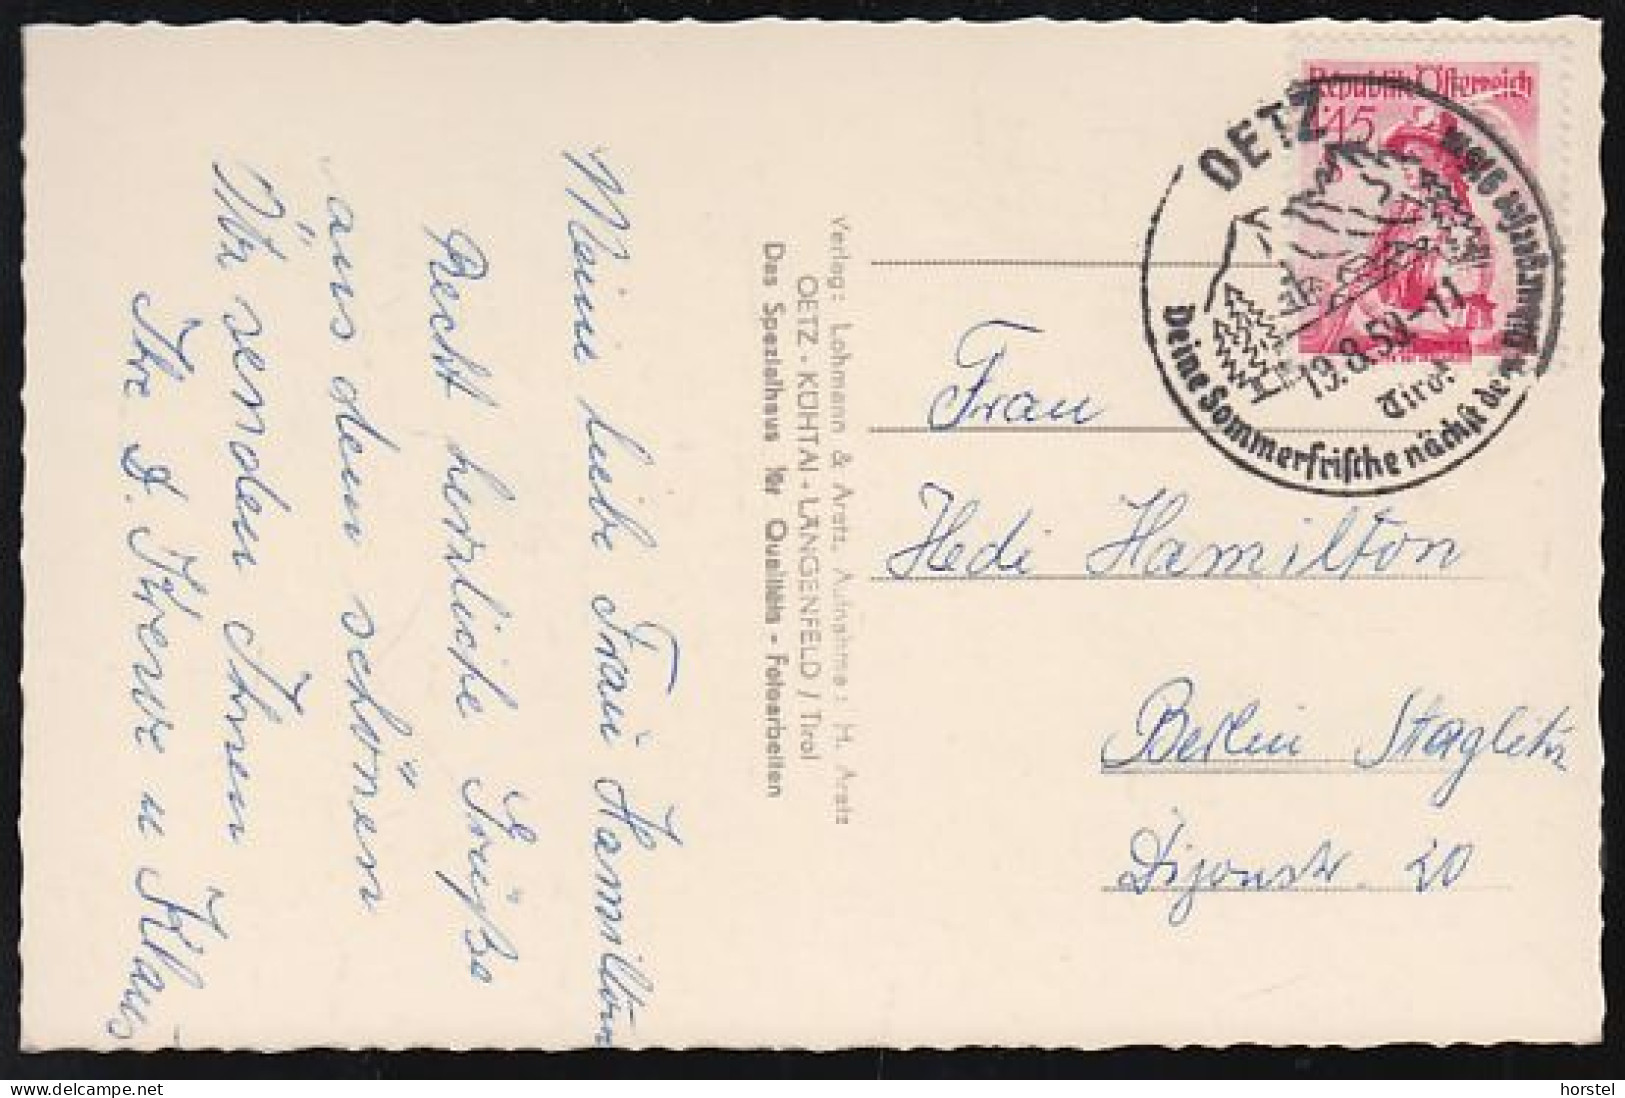 Austria - 6433 Oetz - Blick In's Oetztal - Nice Stamp 1959 - Oetz